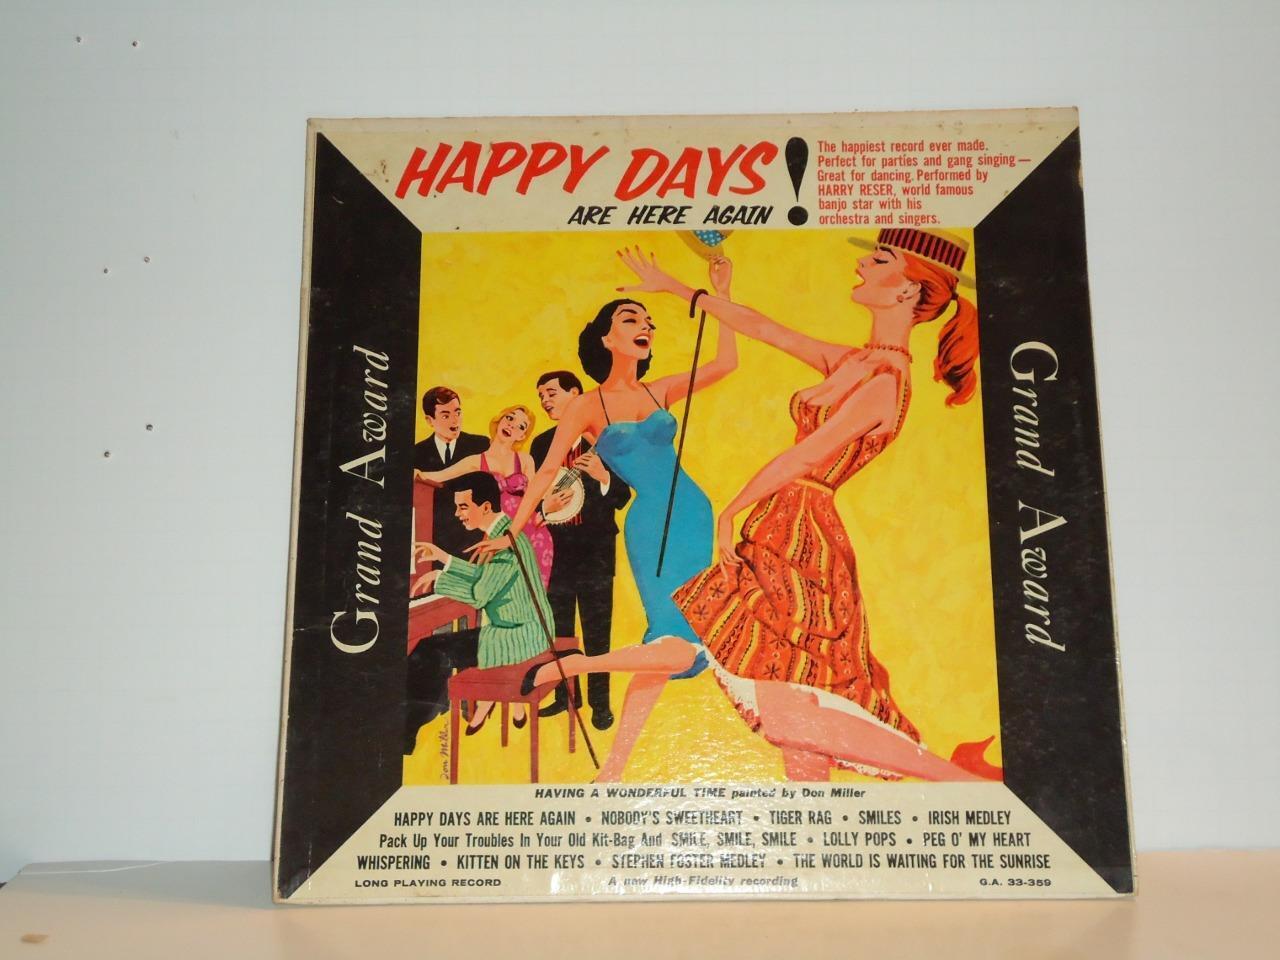 GRAND AWARD - RARE VINTAGE HAPPY DAYS ARE HERE AGAIN VINYL LP RECORD GA 33-359